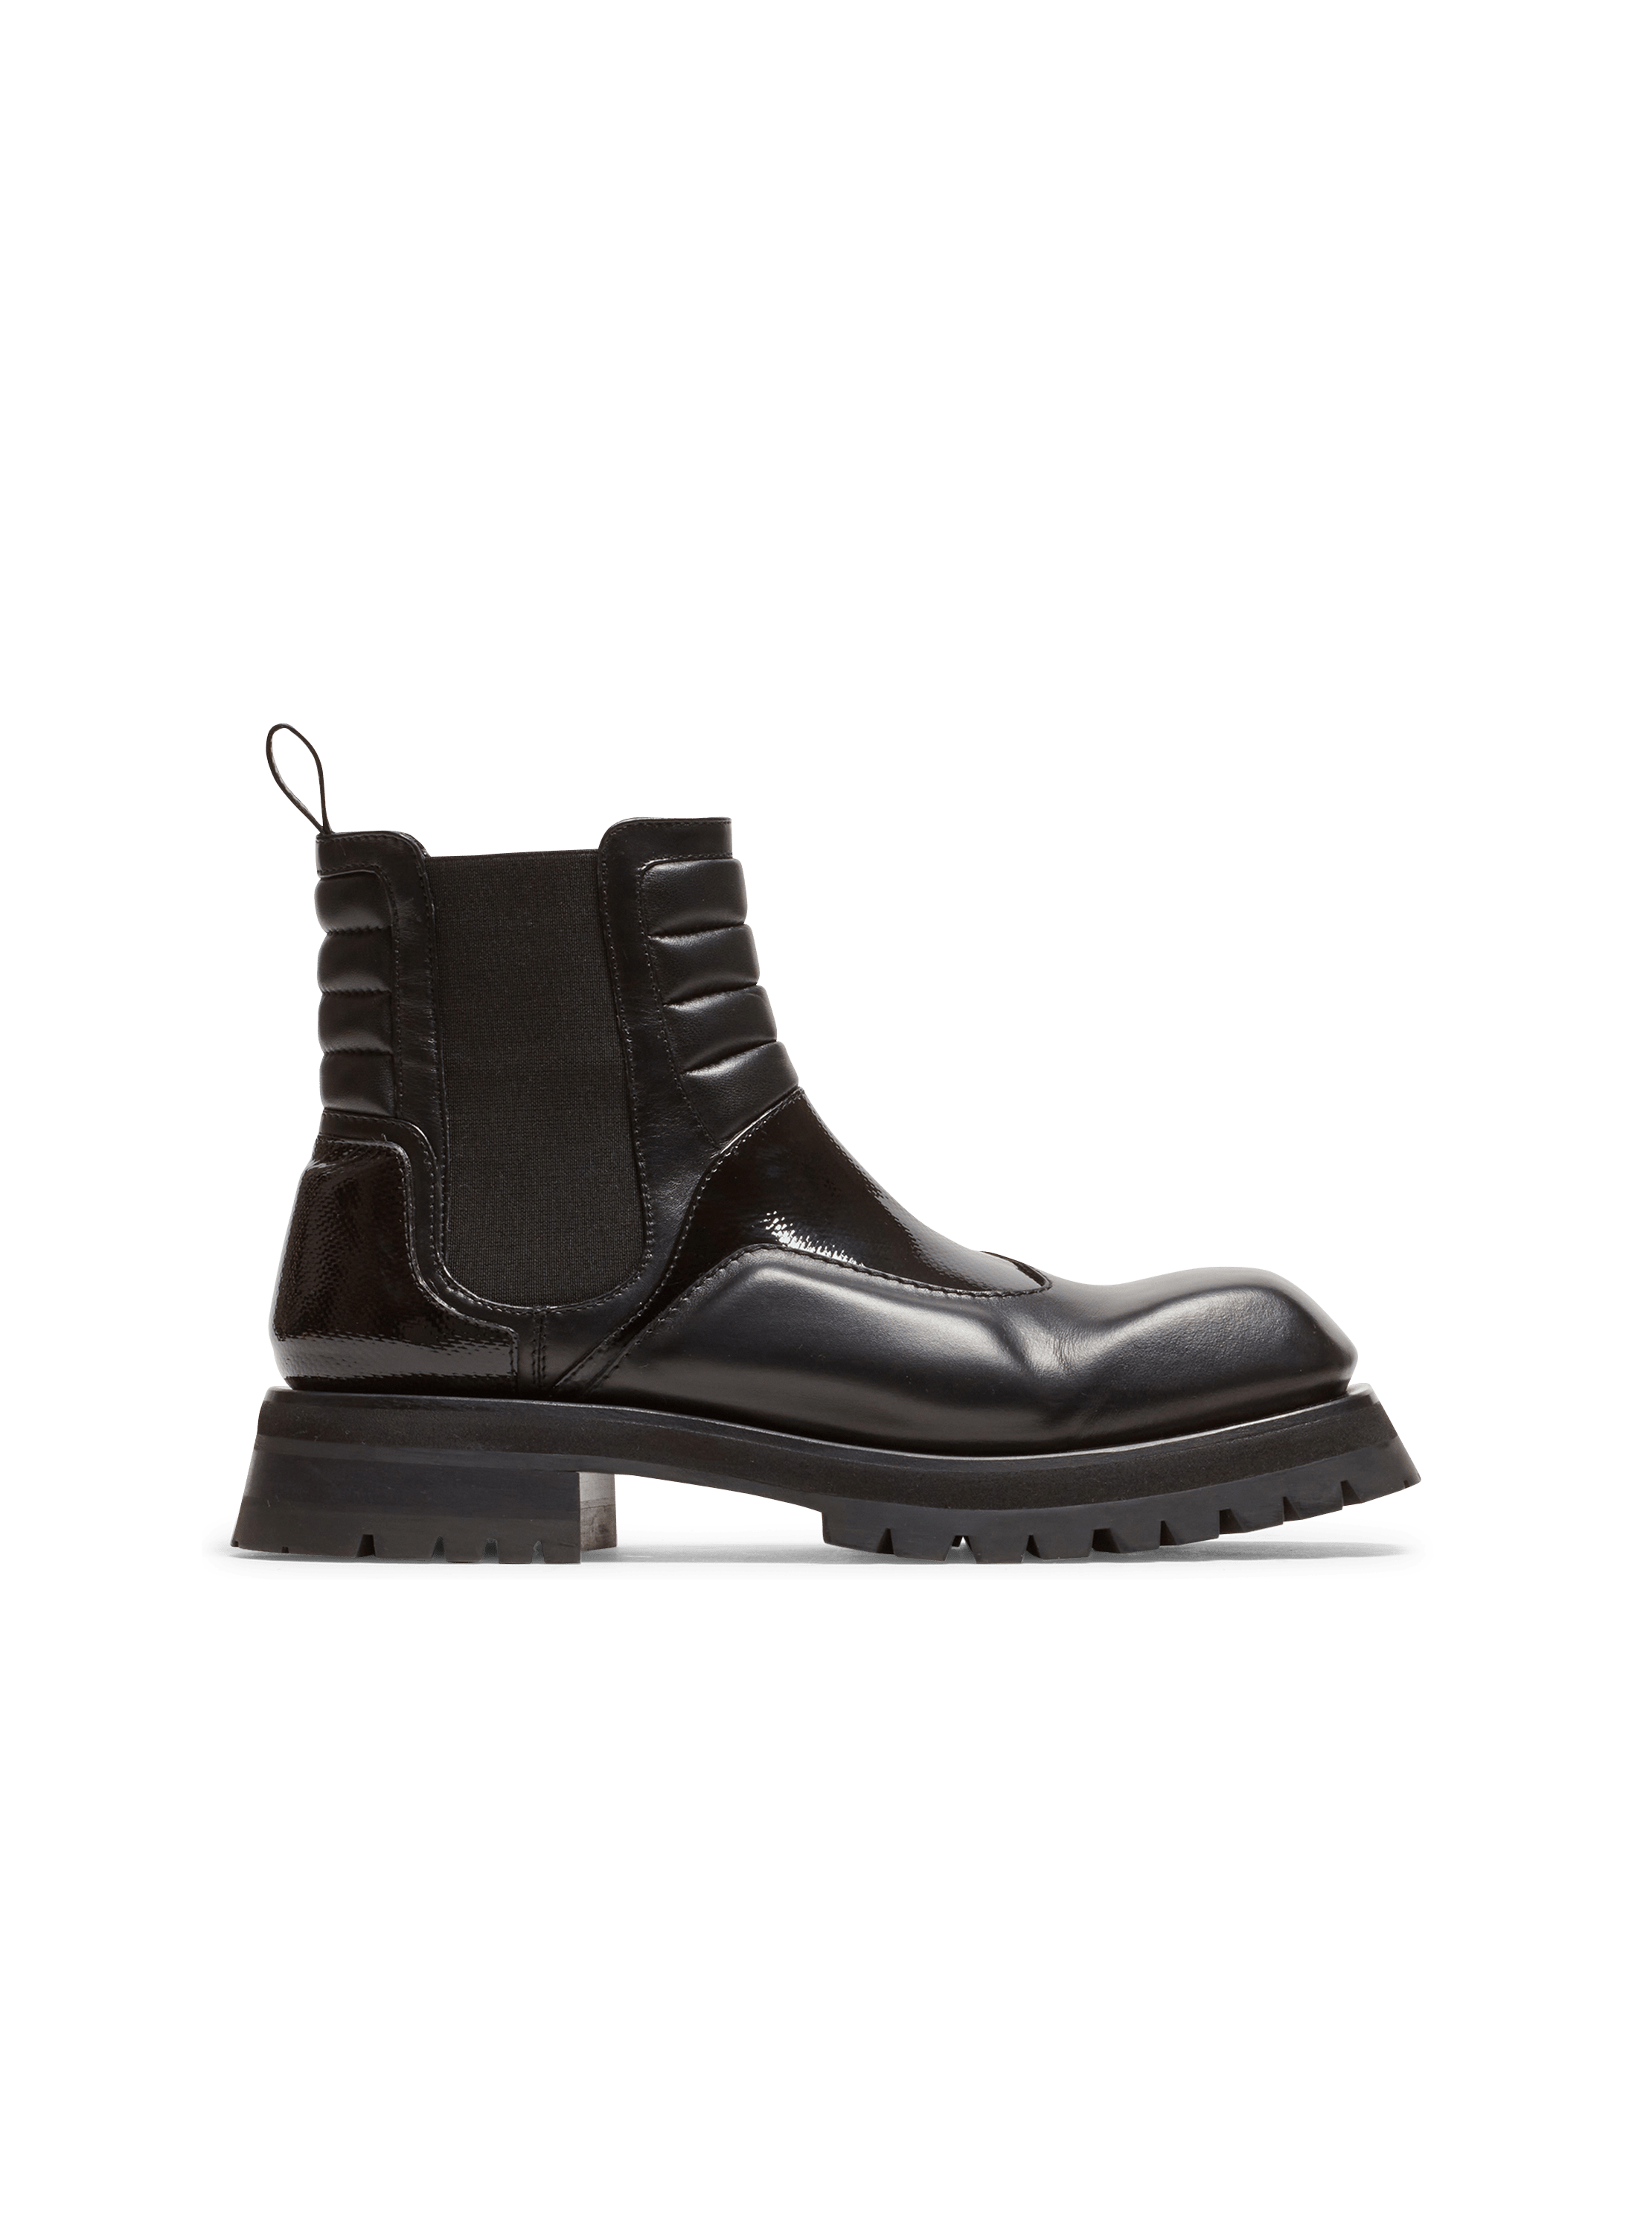 The Timeless Class Of Balmain Chelsea Boots For Men - Shoe Effect